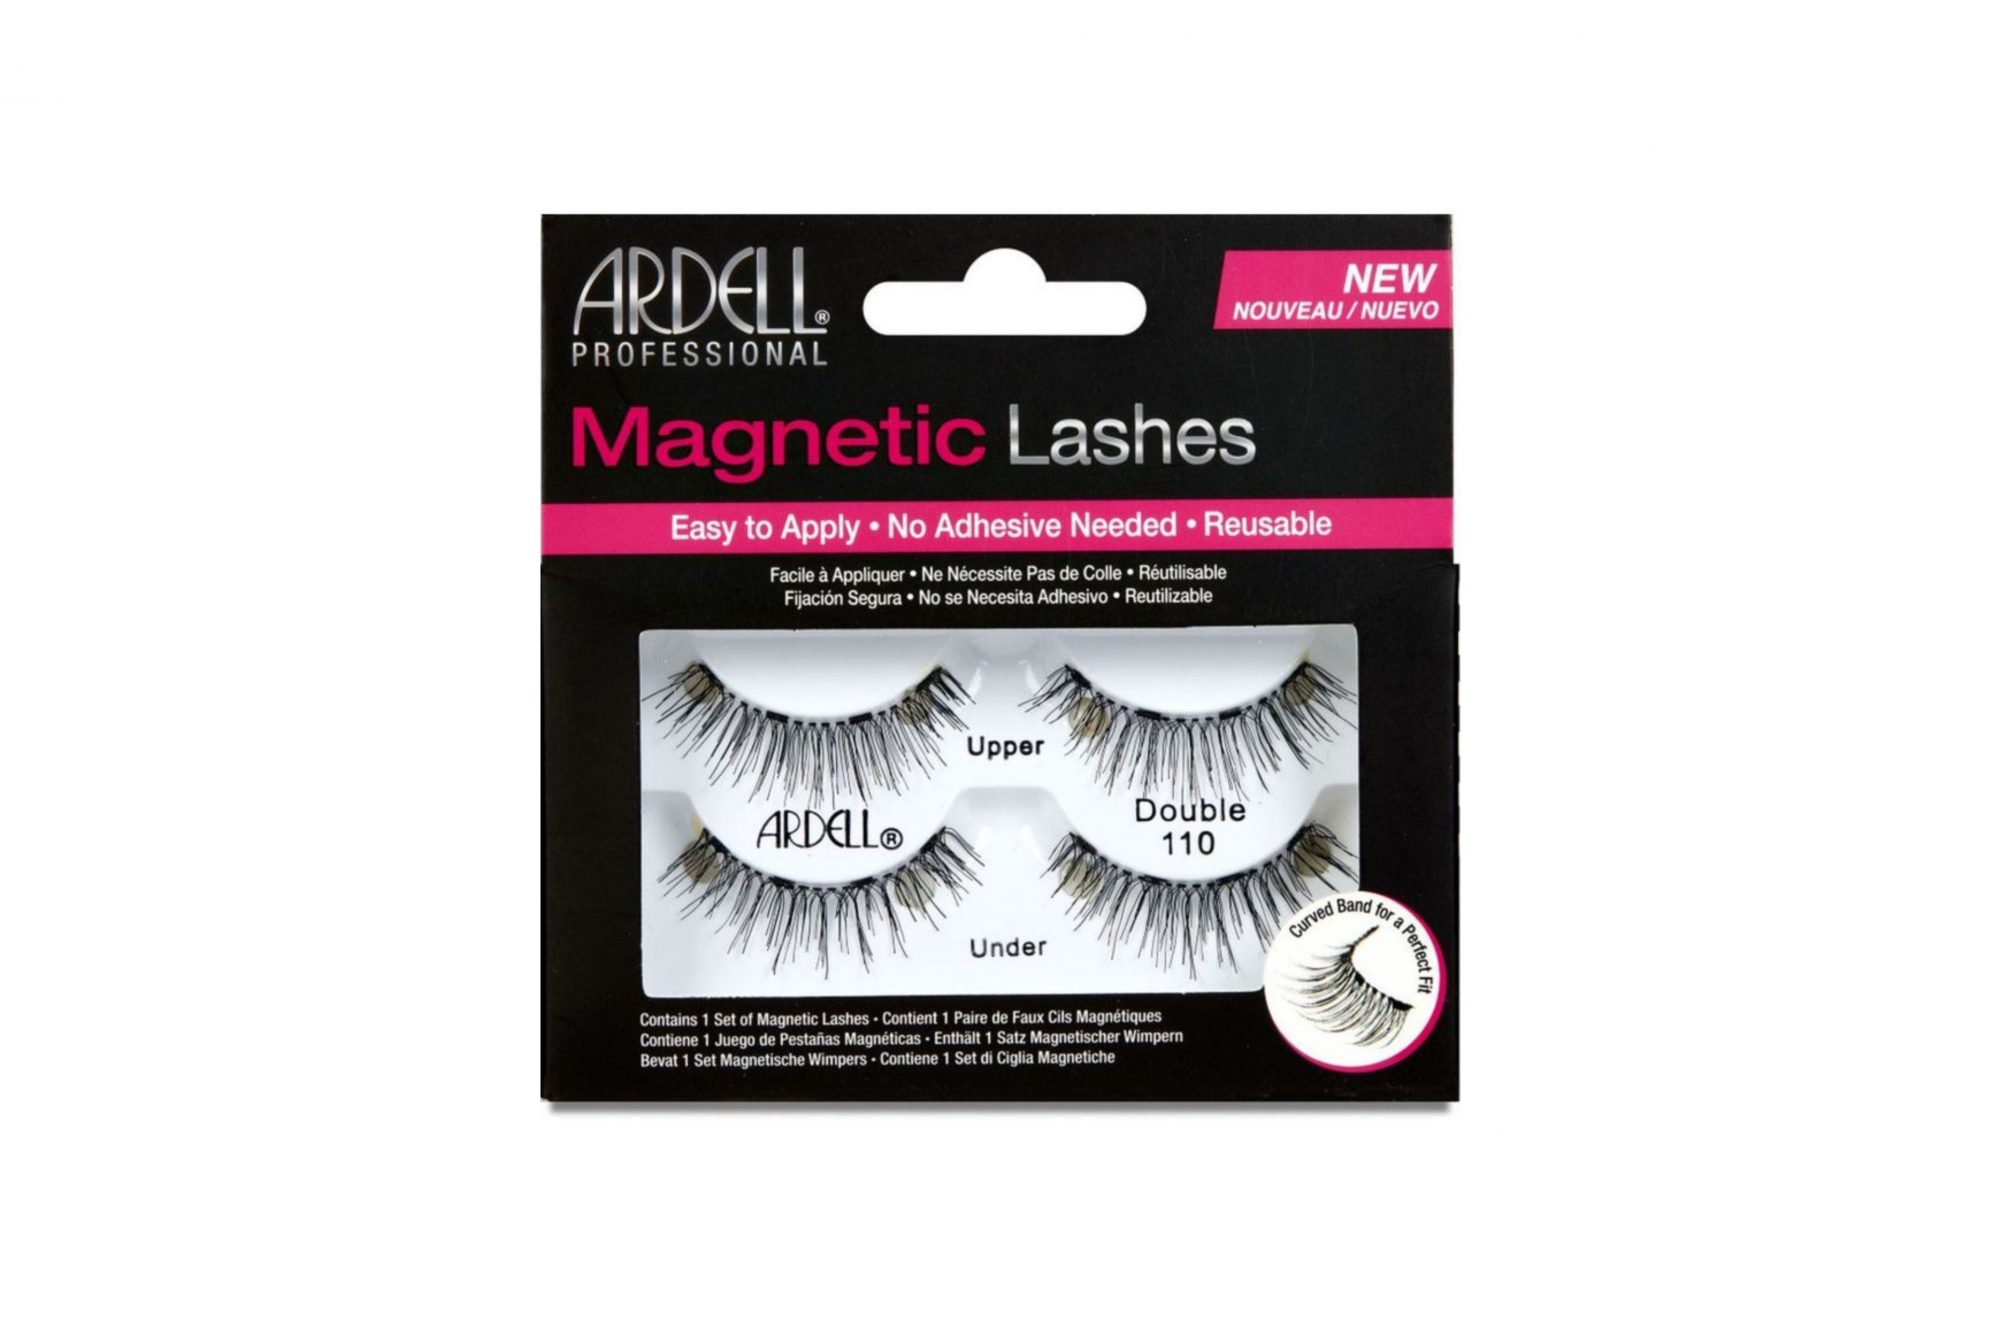 Are Ardell Magnetic Eyelashes Safe? 2